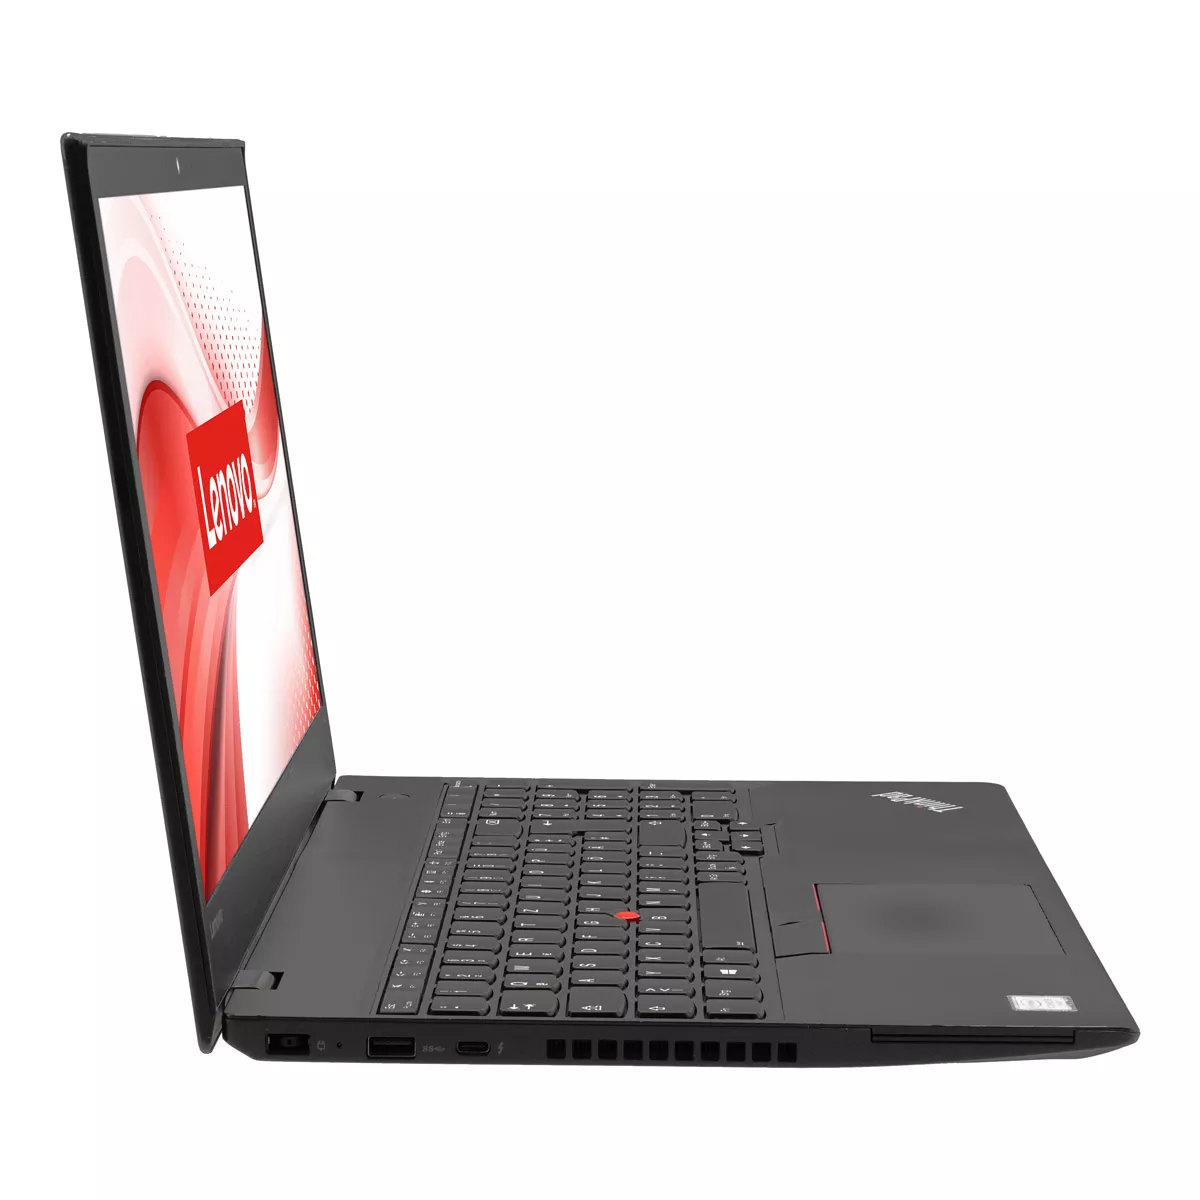 Lenovo ThinkPad T580 Core i5 8250U Full-HD 240 GB M.2 nVME SSD Webcam A+